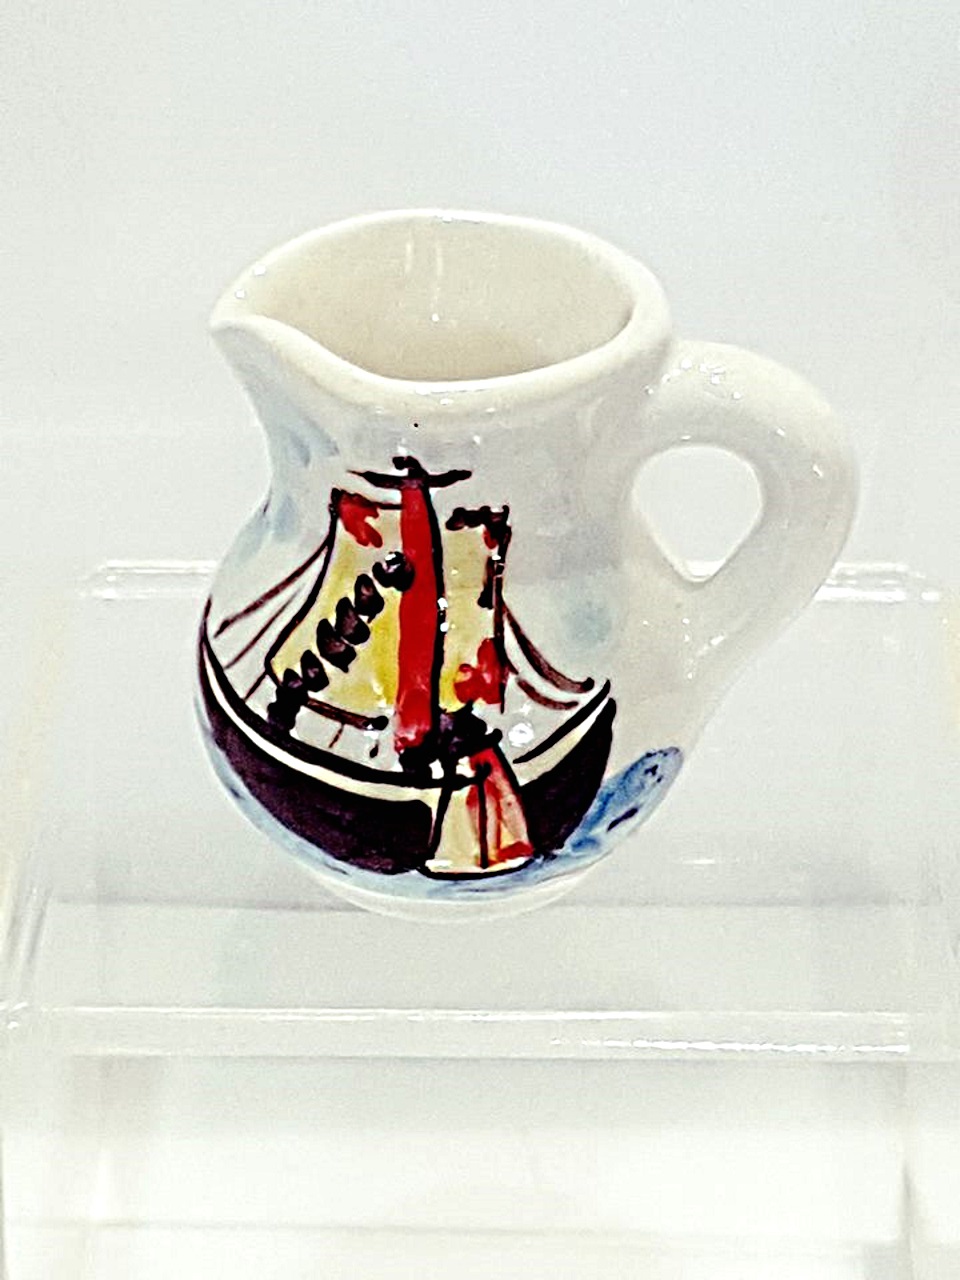 Brocche di ceramica dipinte a mano 6 x 5 cm